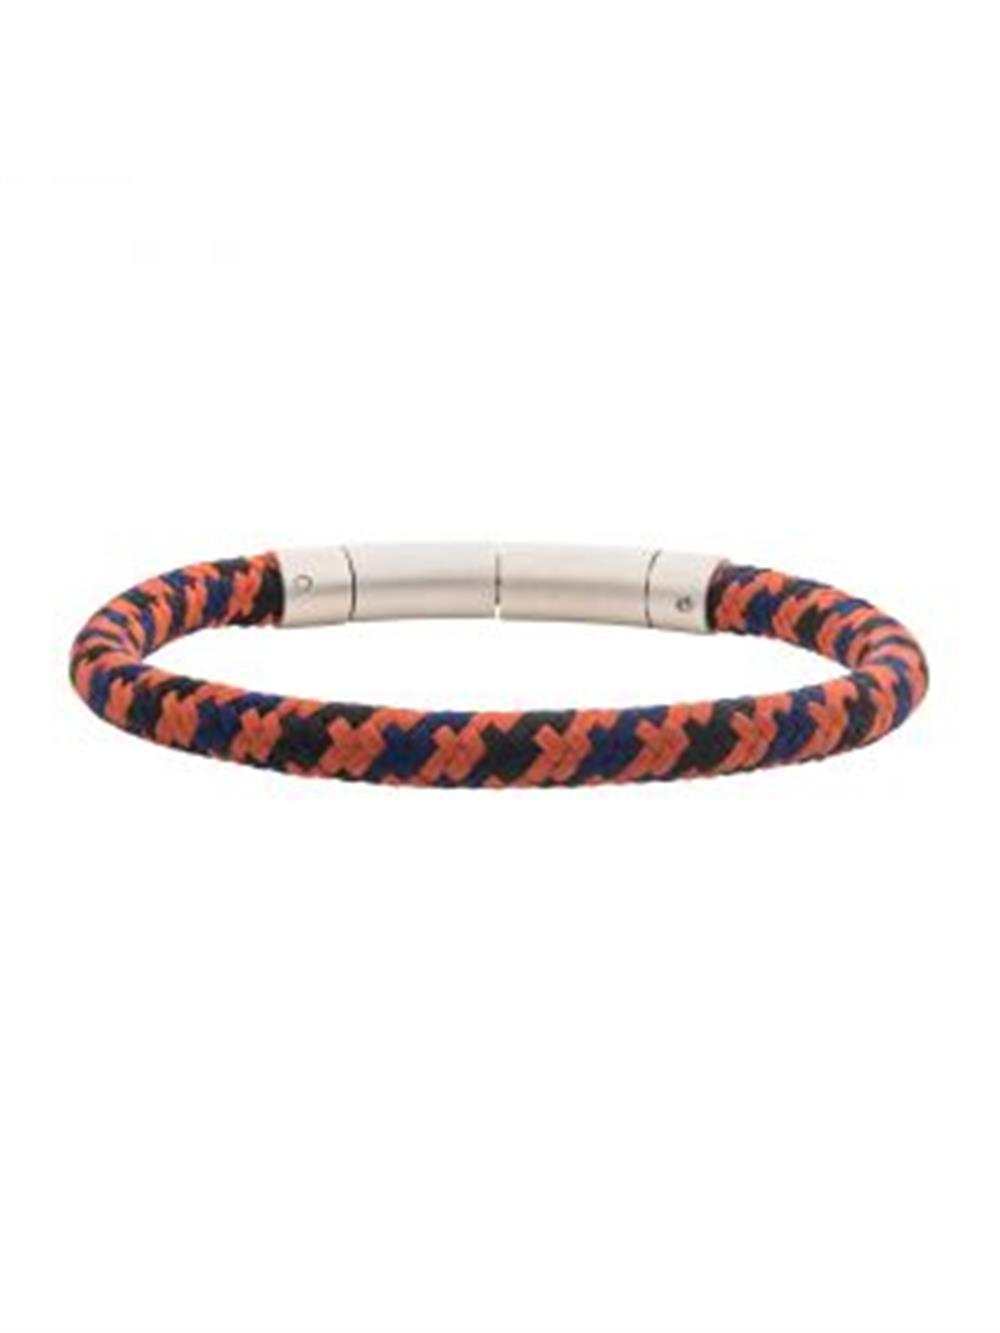 6mm Burnt Orange, Blue and Black Nylon Cord Bracelet. Length: 8.5-8" | INOX